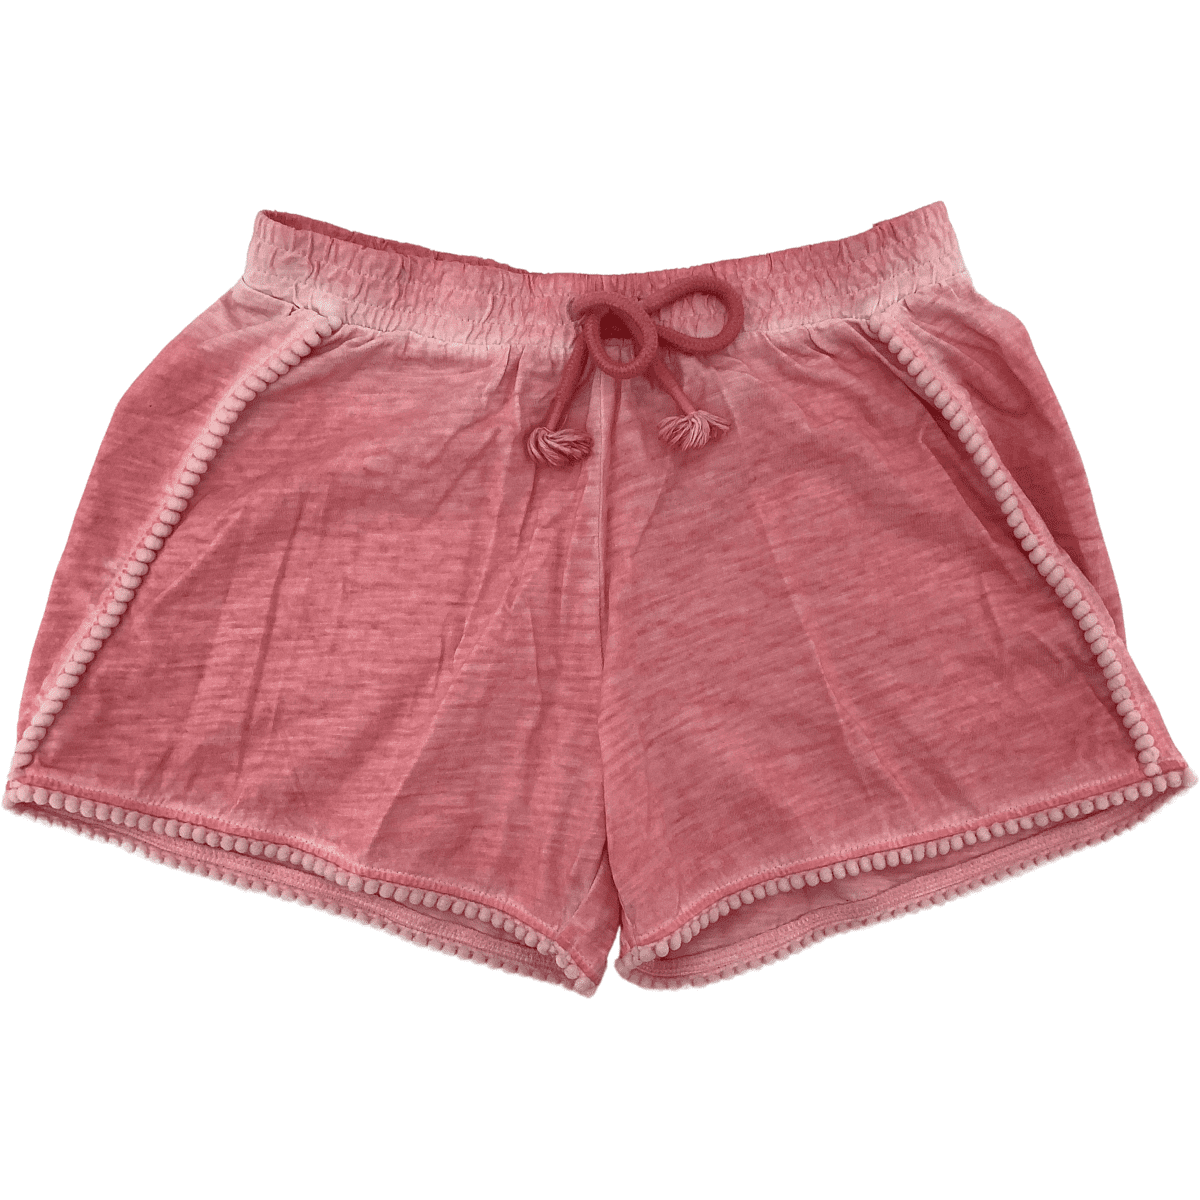 manguu girl's shorts